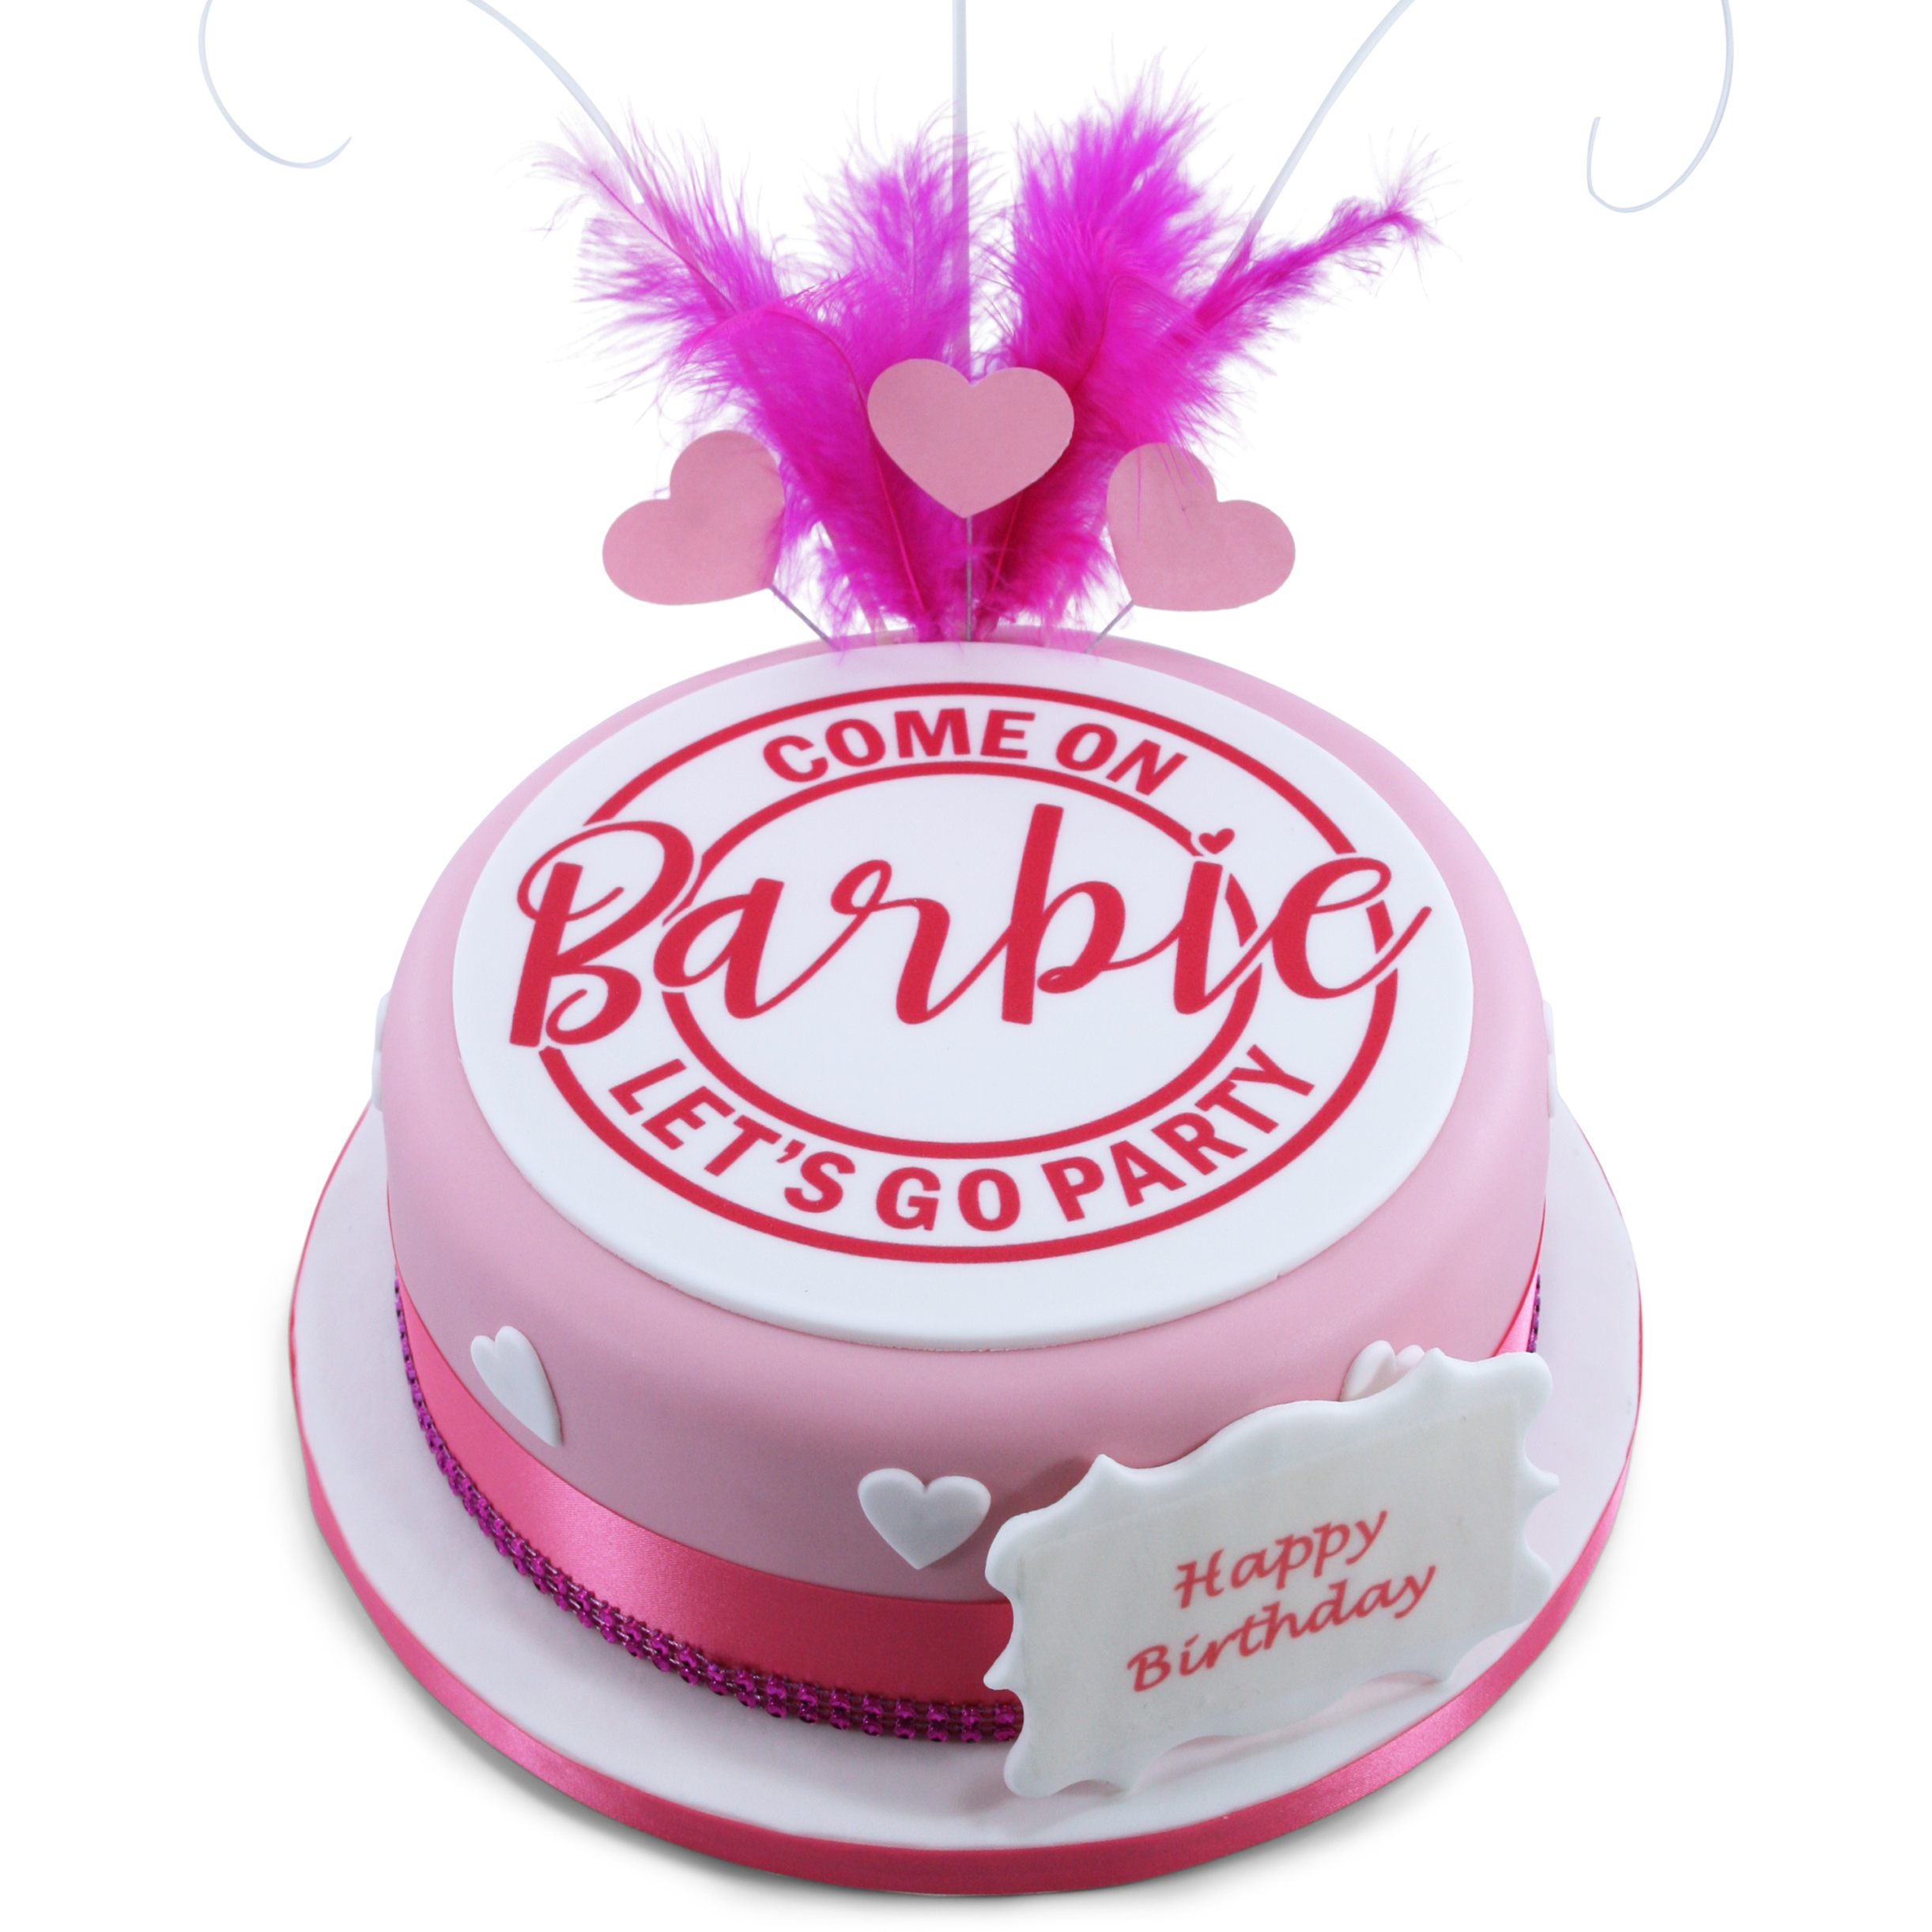 Gorgeous Barbie Cake Decorating Tutorial | How to Make Princess Cake | Doll  Cake Design #9 - YouTube